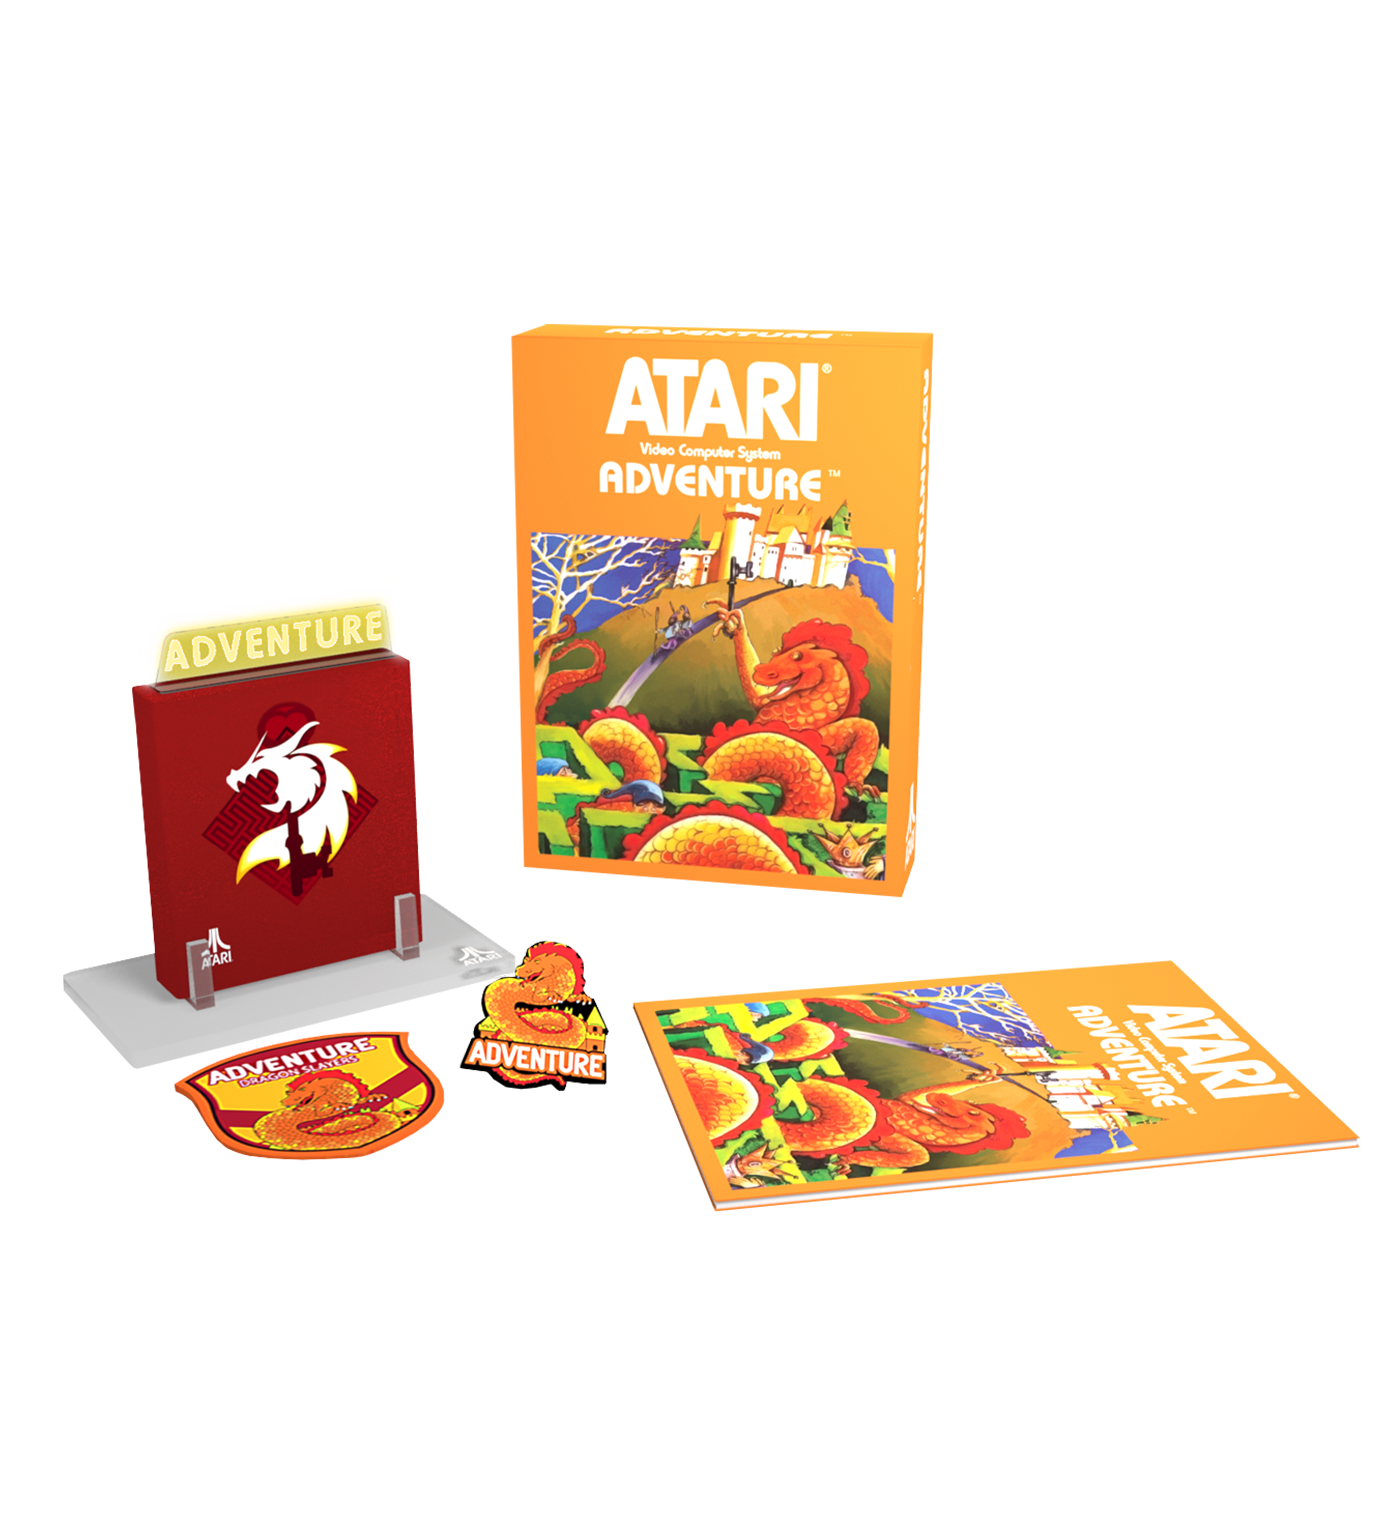 Limited Run Games Adventure Limited Edition (Atari)